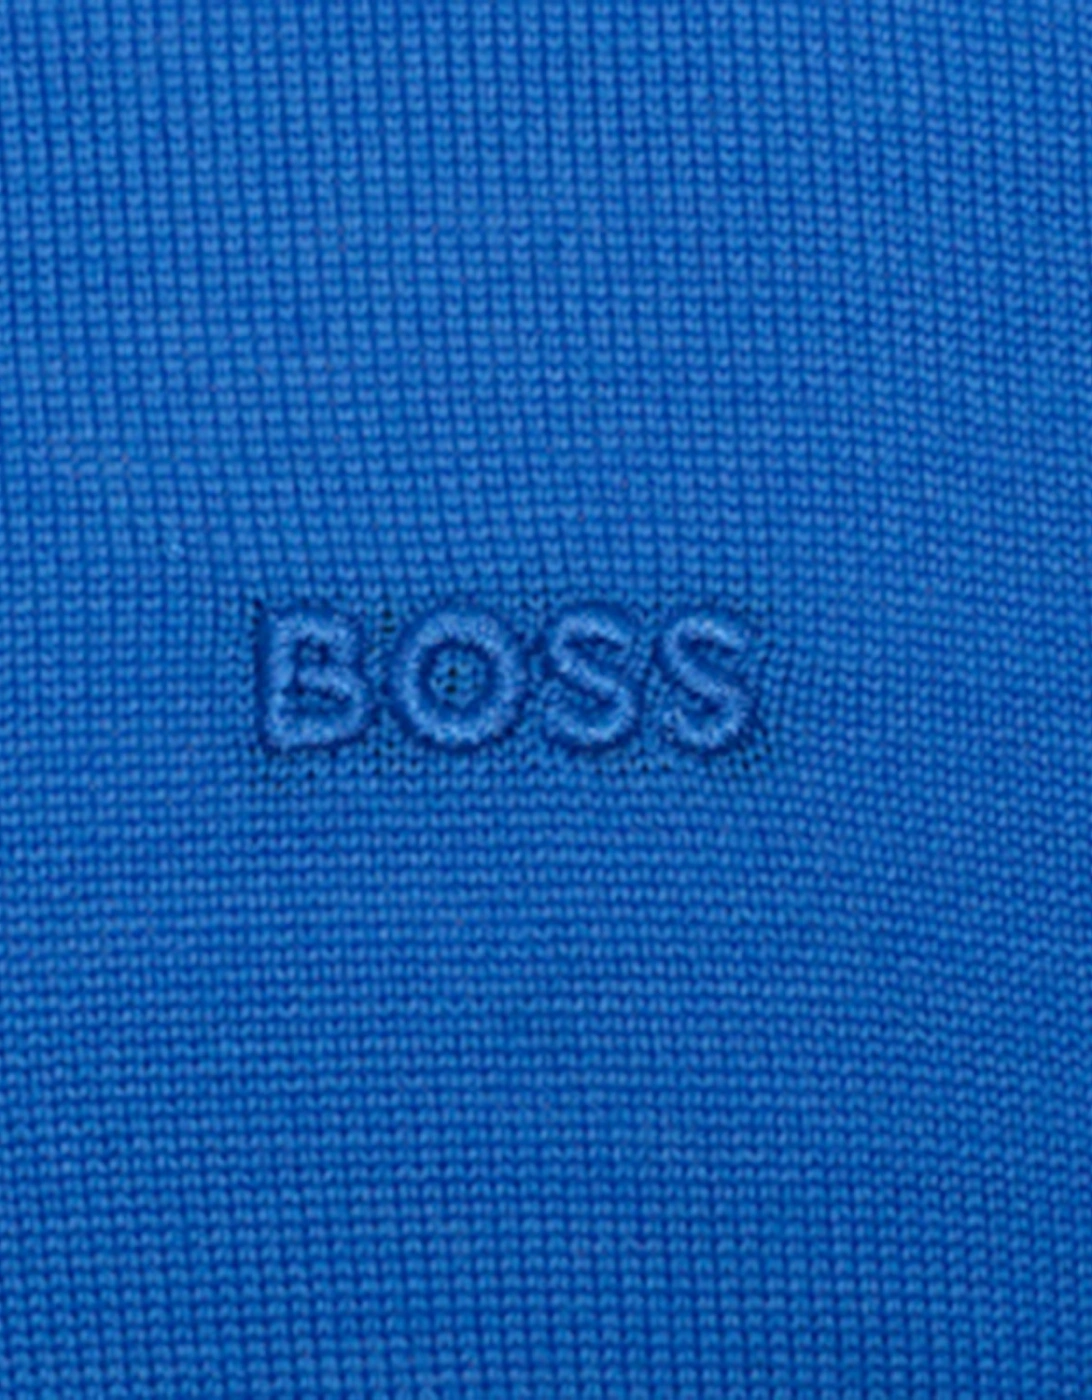 Mens Botto-L Knit Sweatshirt (Blue)